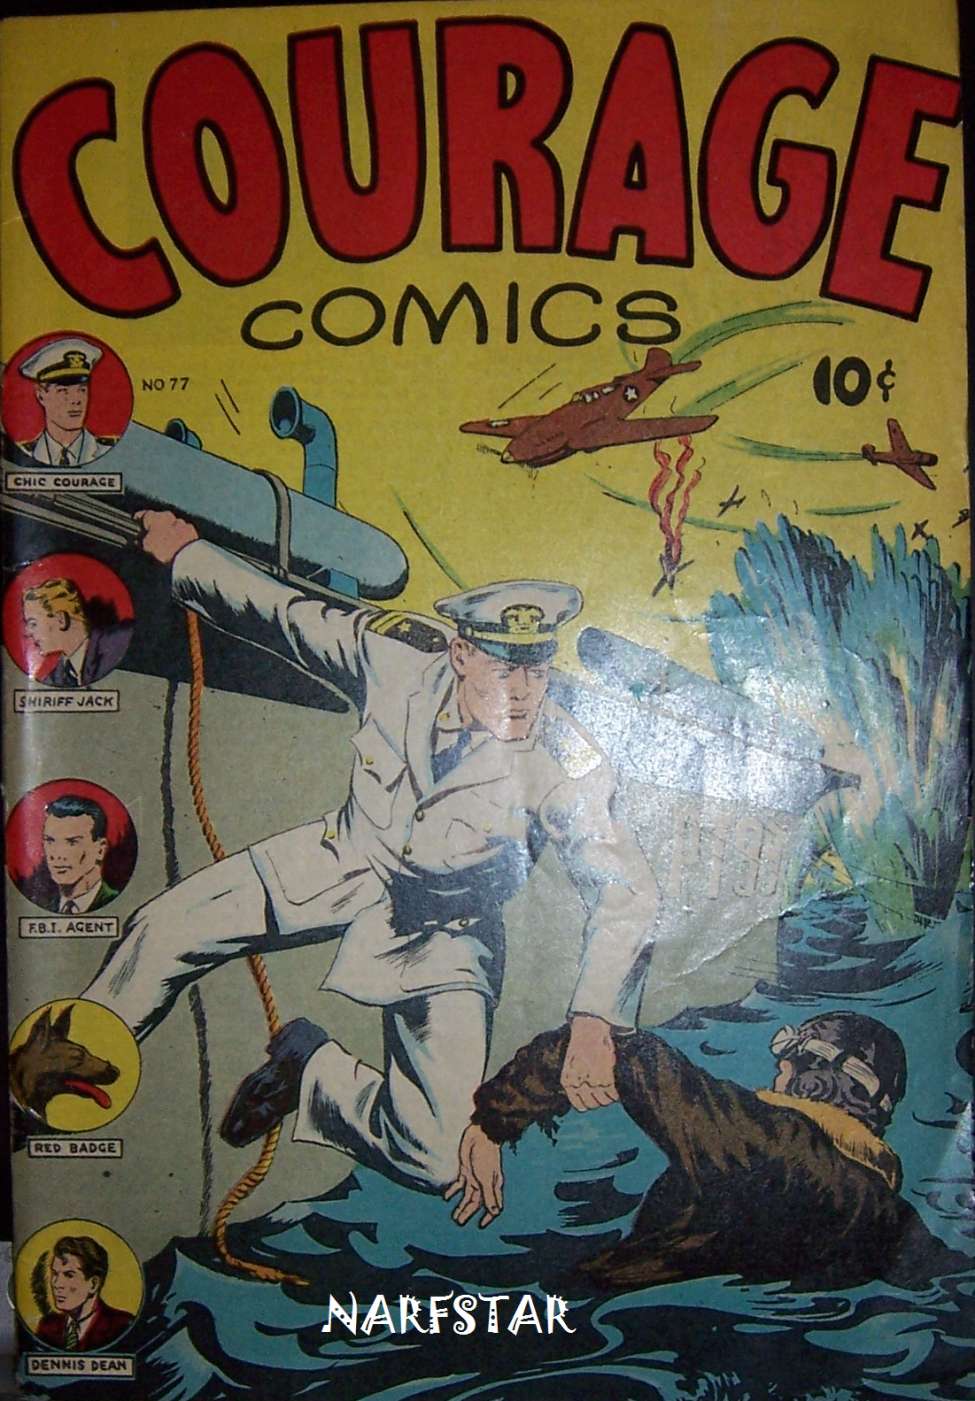 Courage Comics 77 (J. Edward Slavin: Courage Comics)